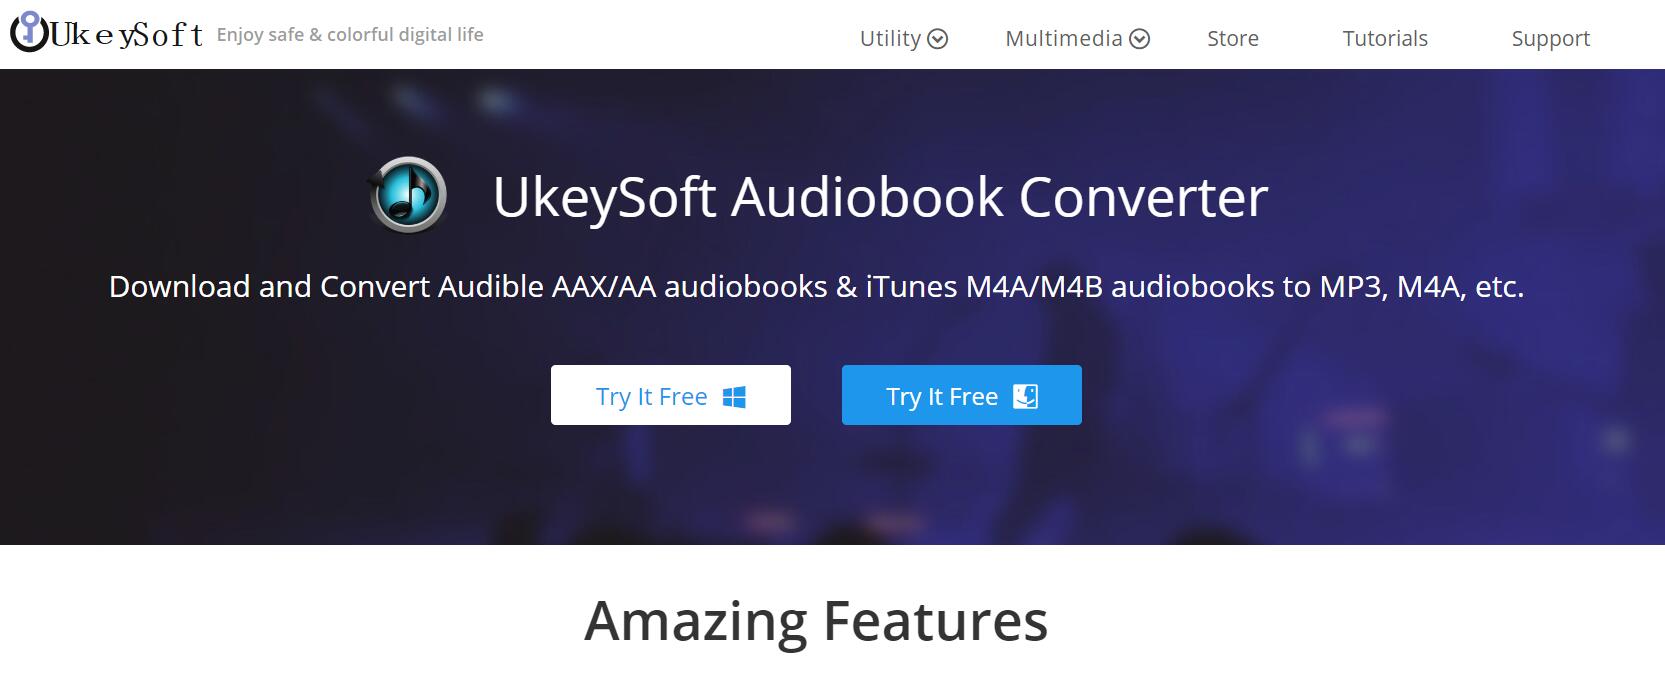 UkeySoft Audiobook Converter Landing page